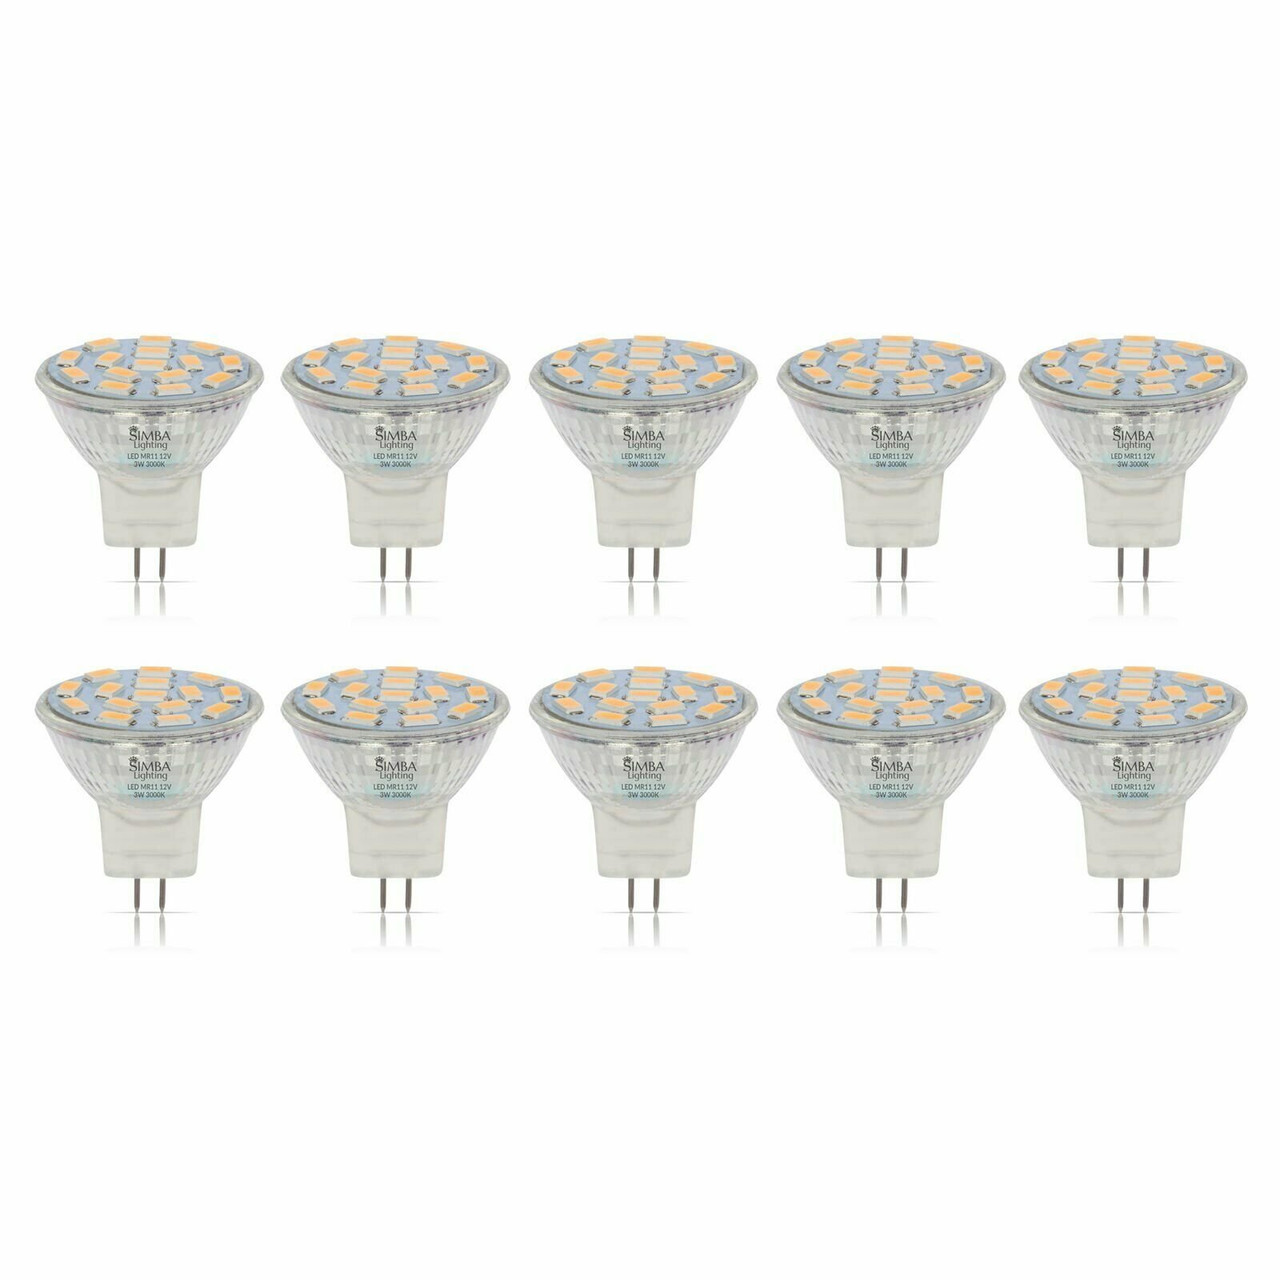 Arbejdsløs ide Enkelhed Simba Lighting® LED MR11 3W 20W Halogen Replacement Bulbs 12V GU4 Bi-Pin  3000K Soft